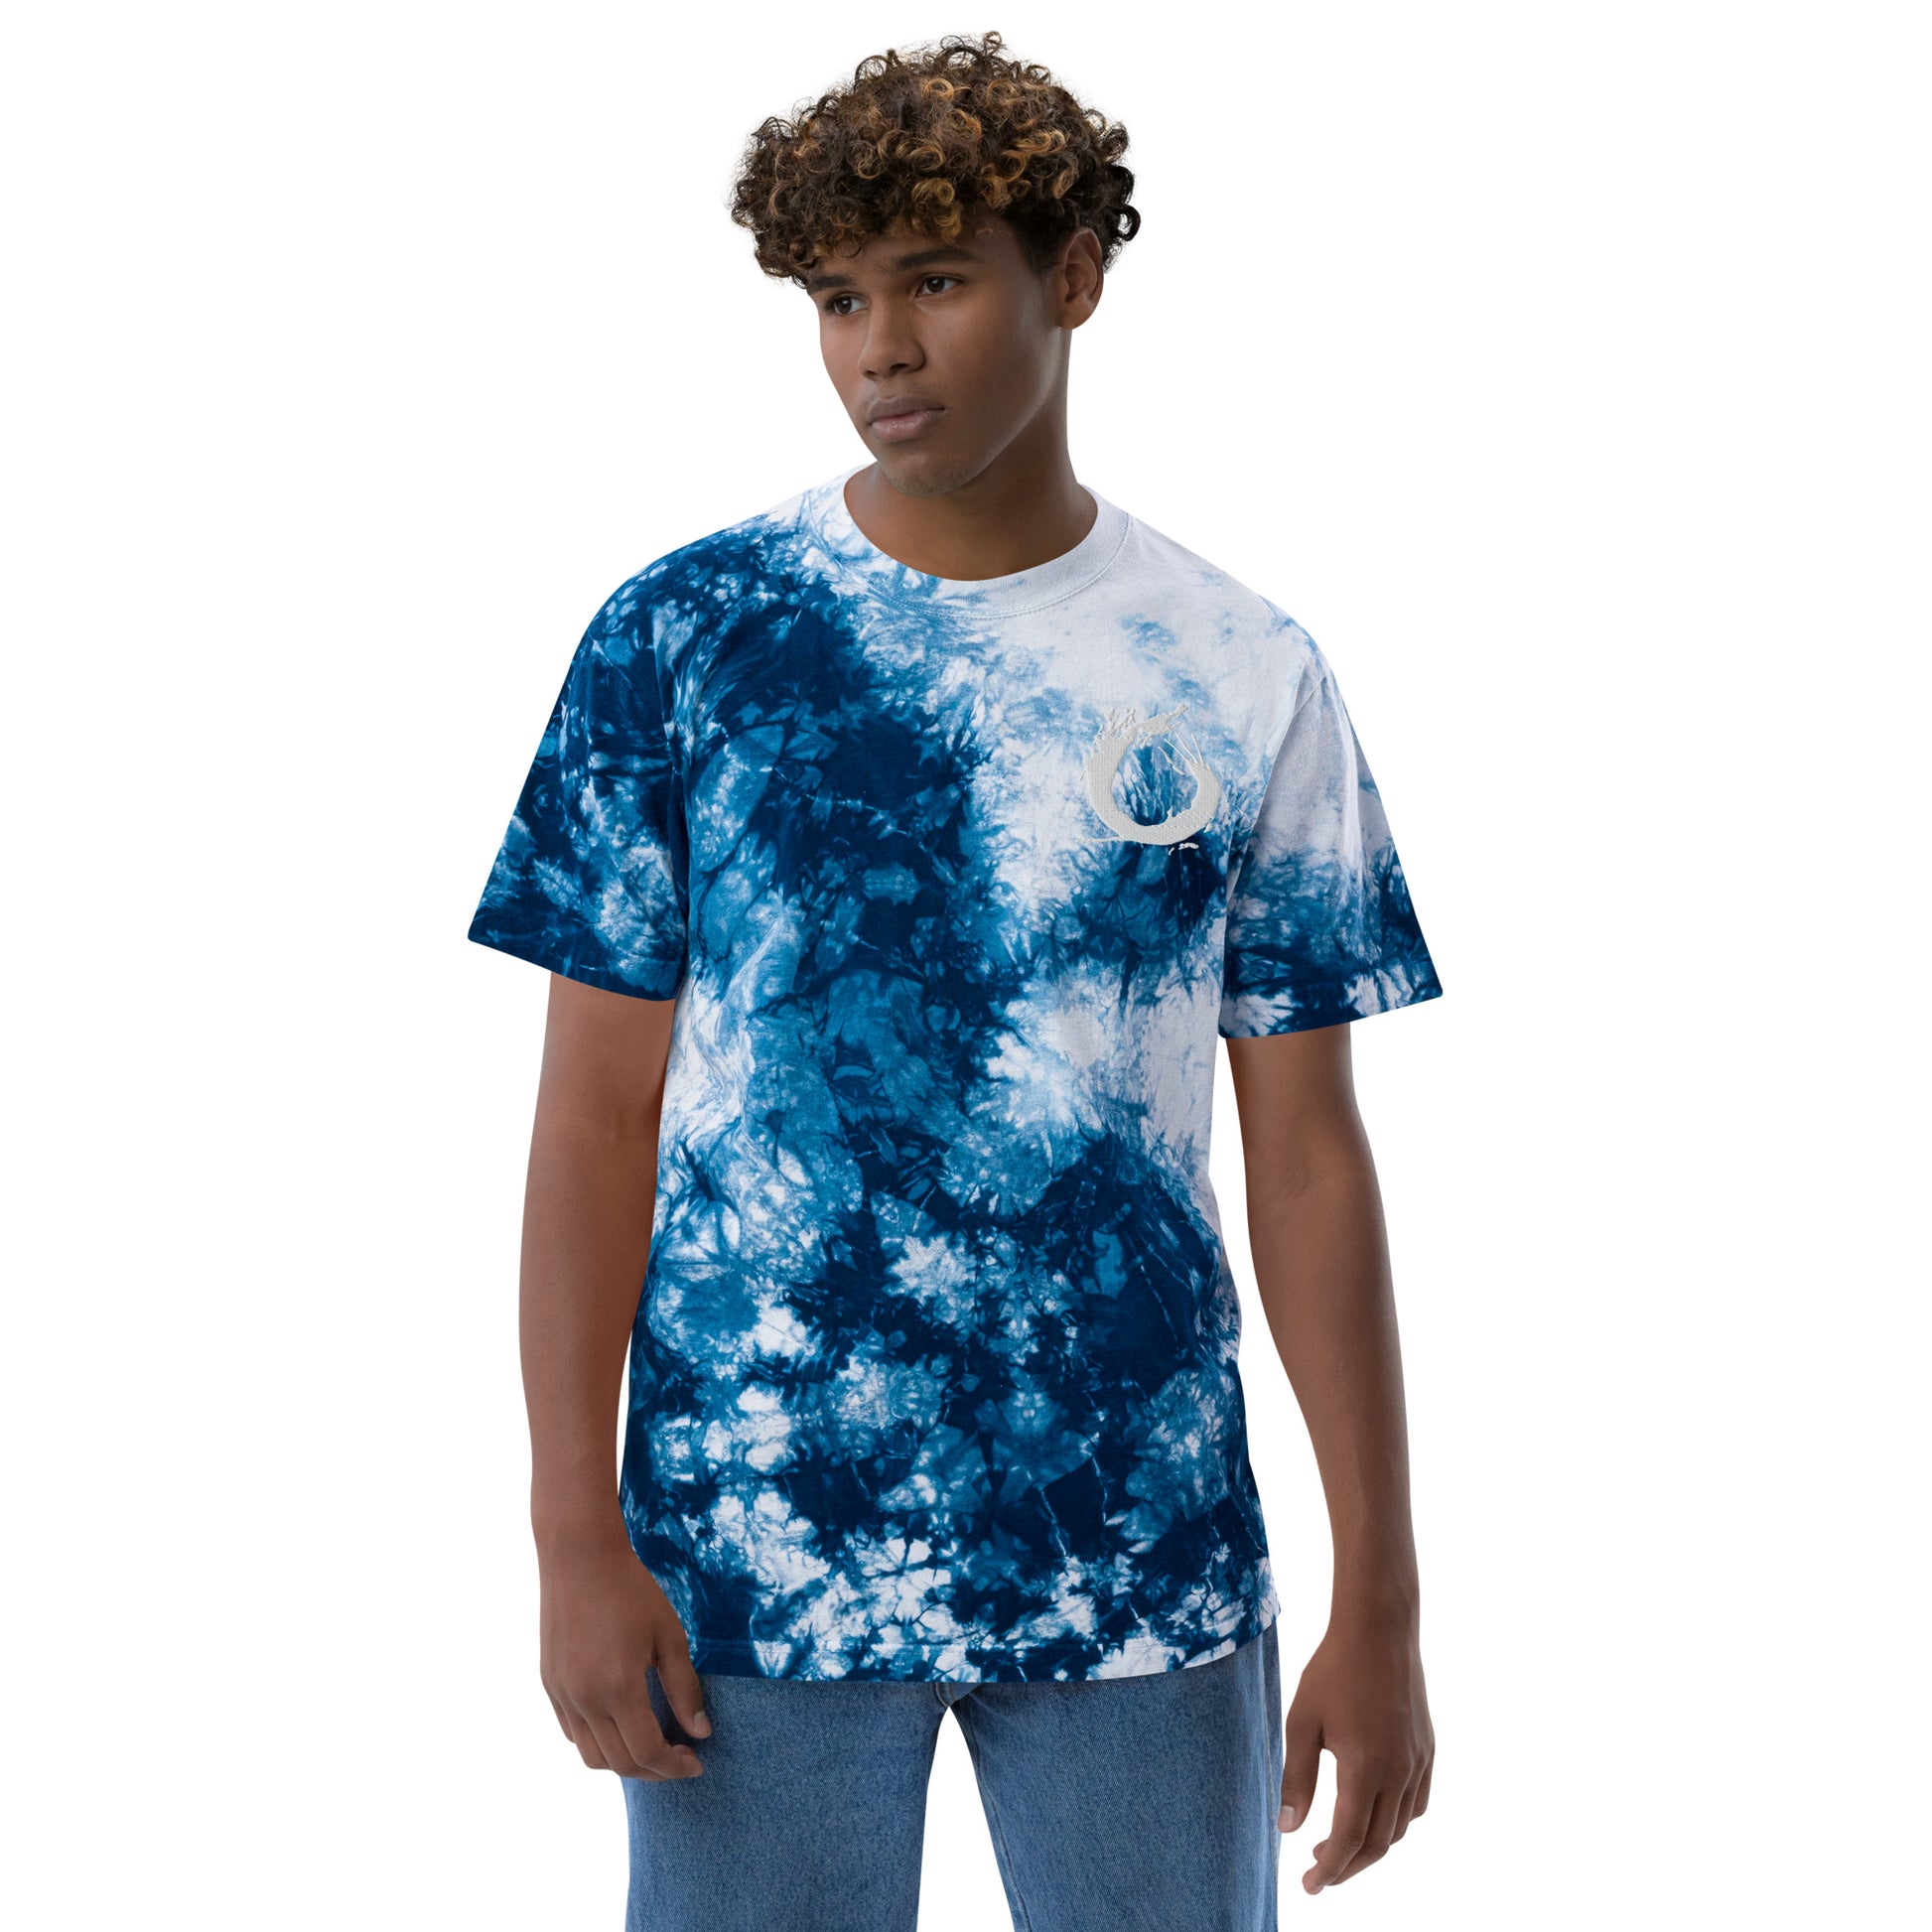 "Splash" tie-dye t-shirt